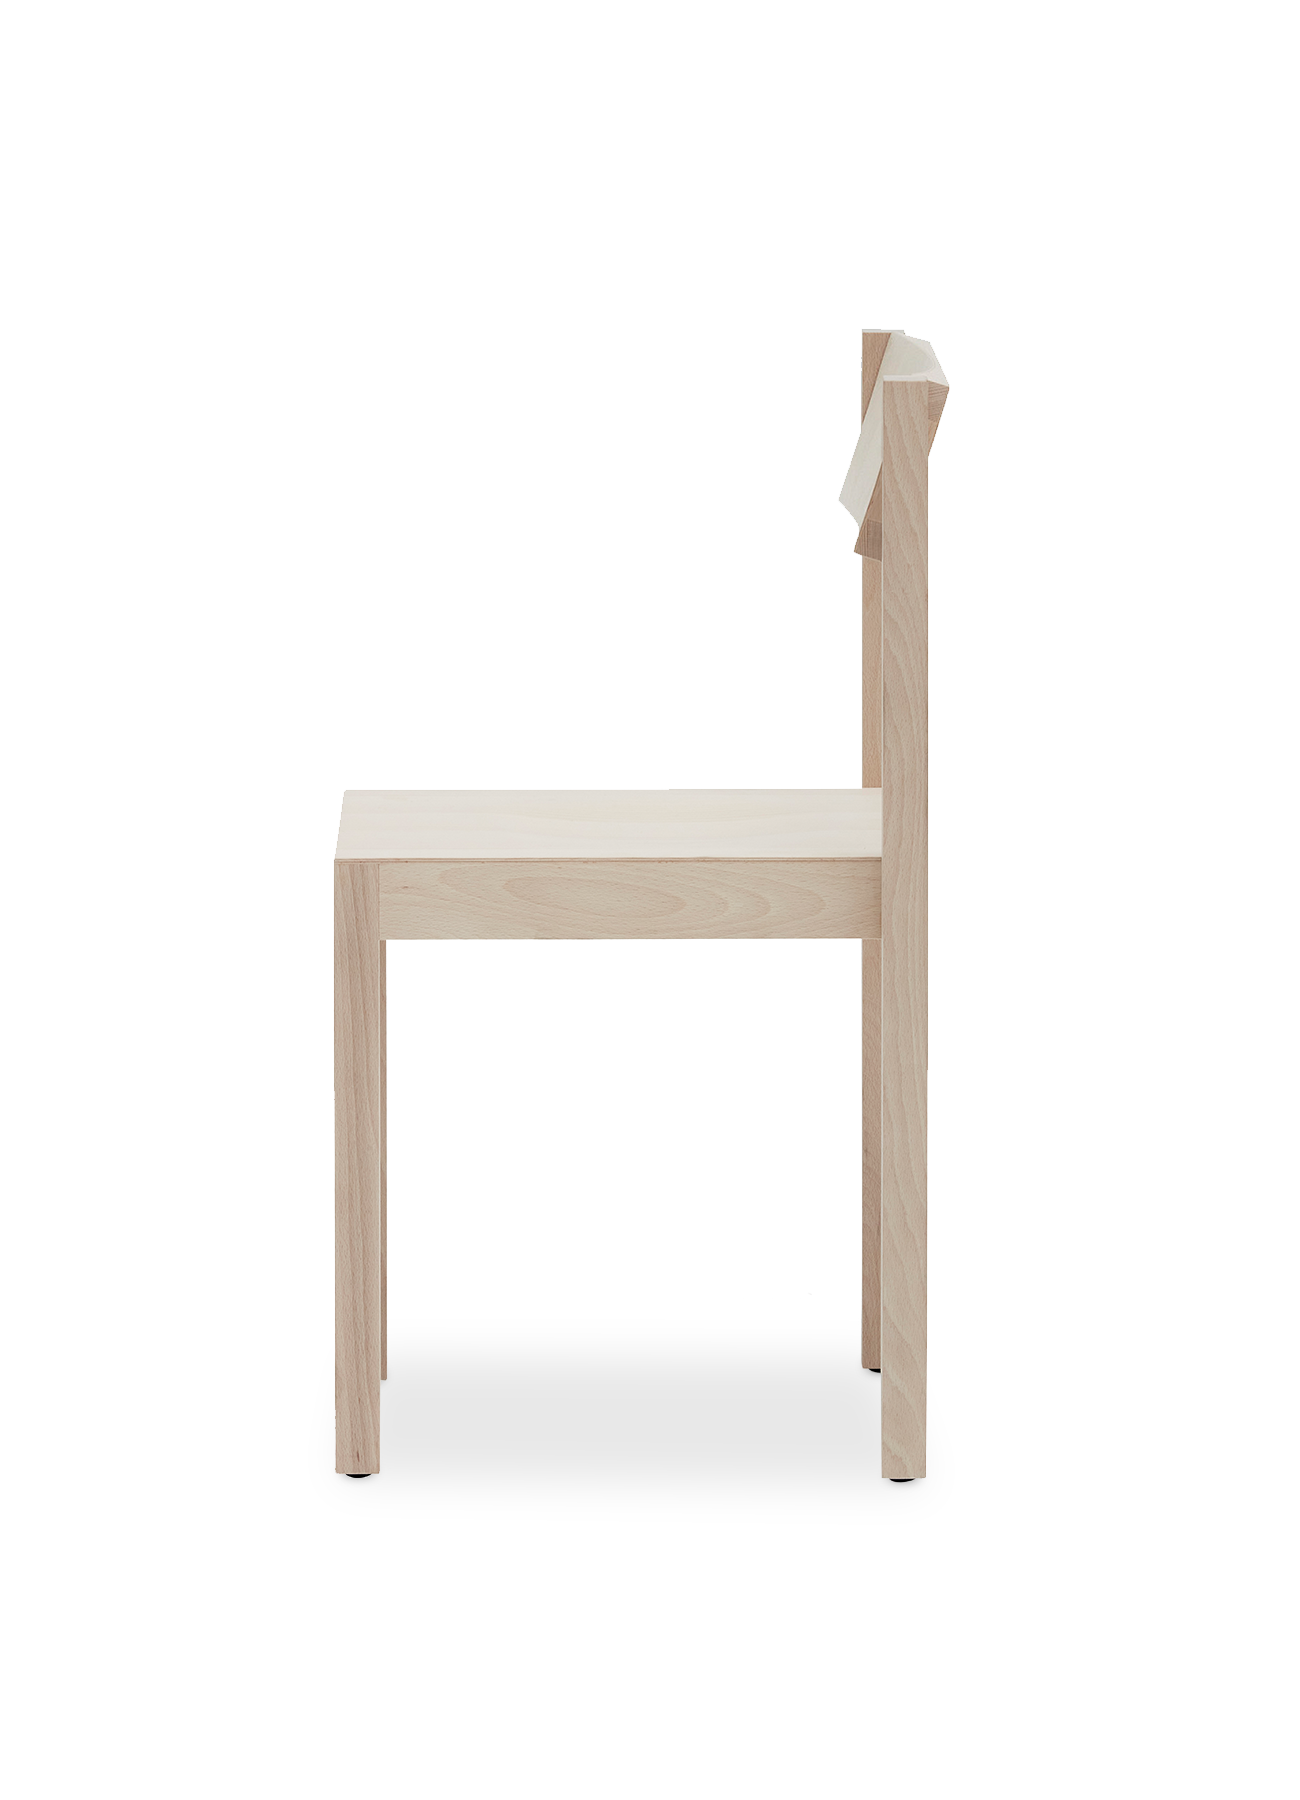 Archetype-A, wooden chair designed for the Italian company Billiani